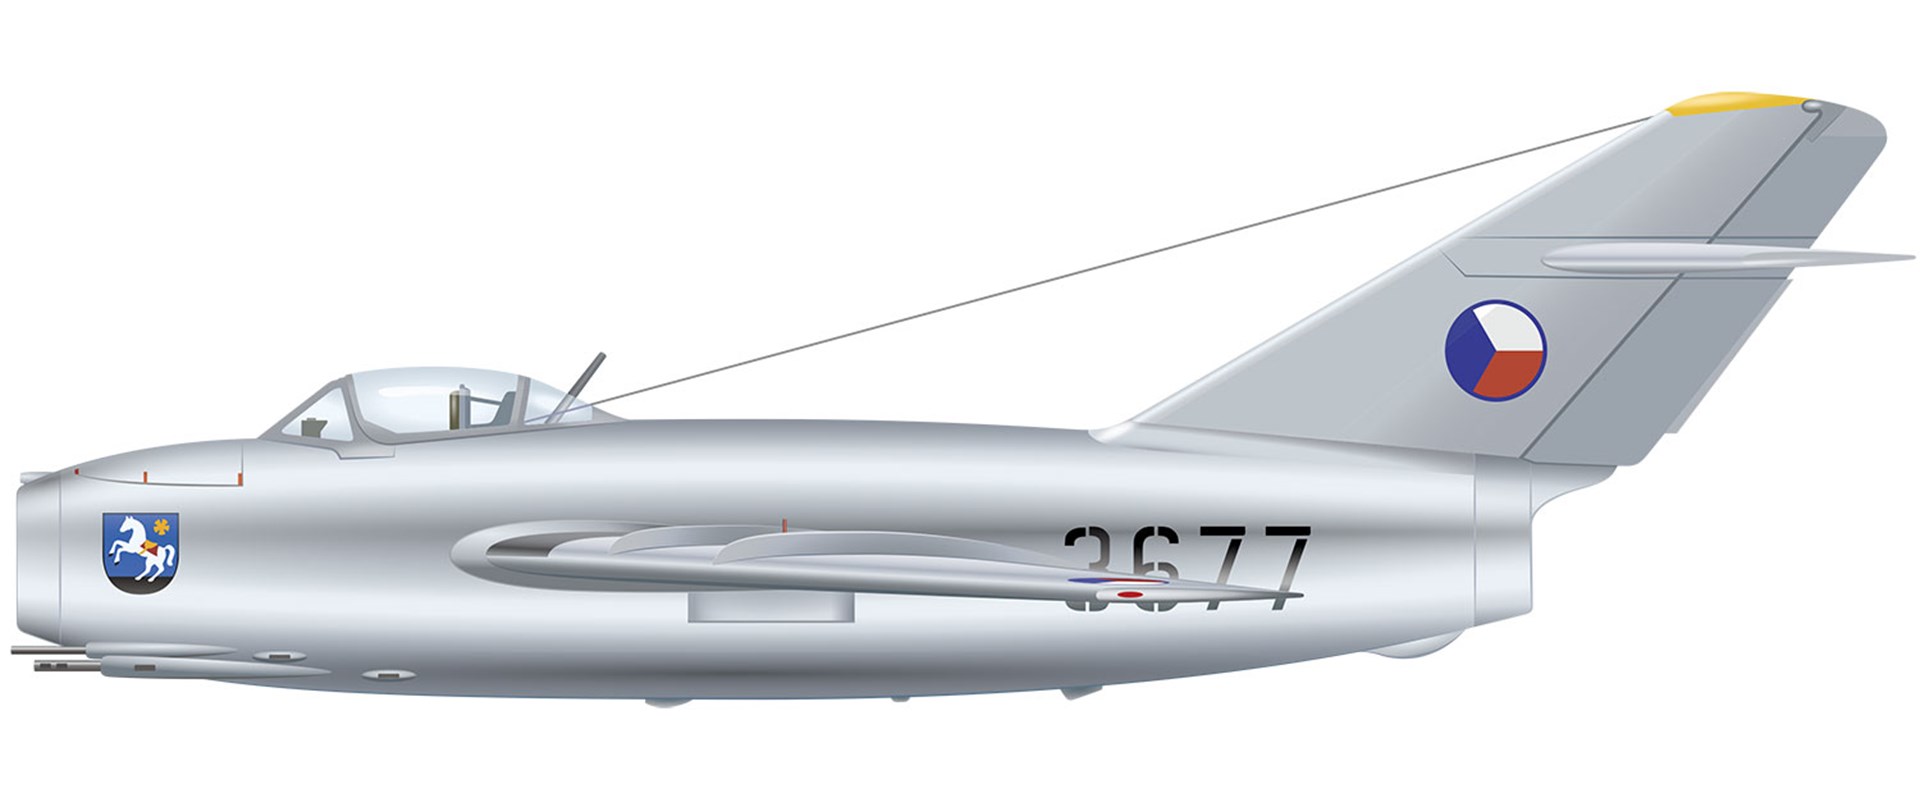 A white Aero S-103 jet fighter. 